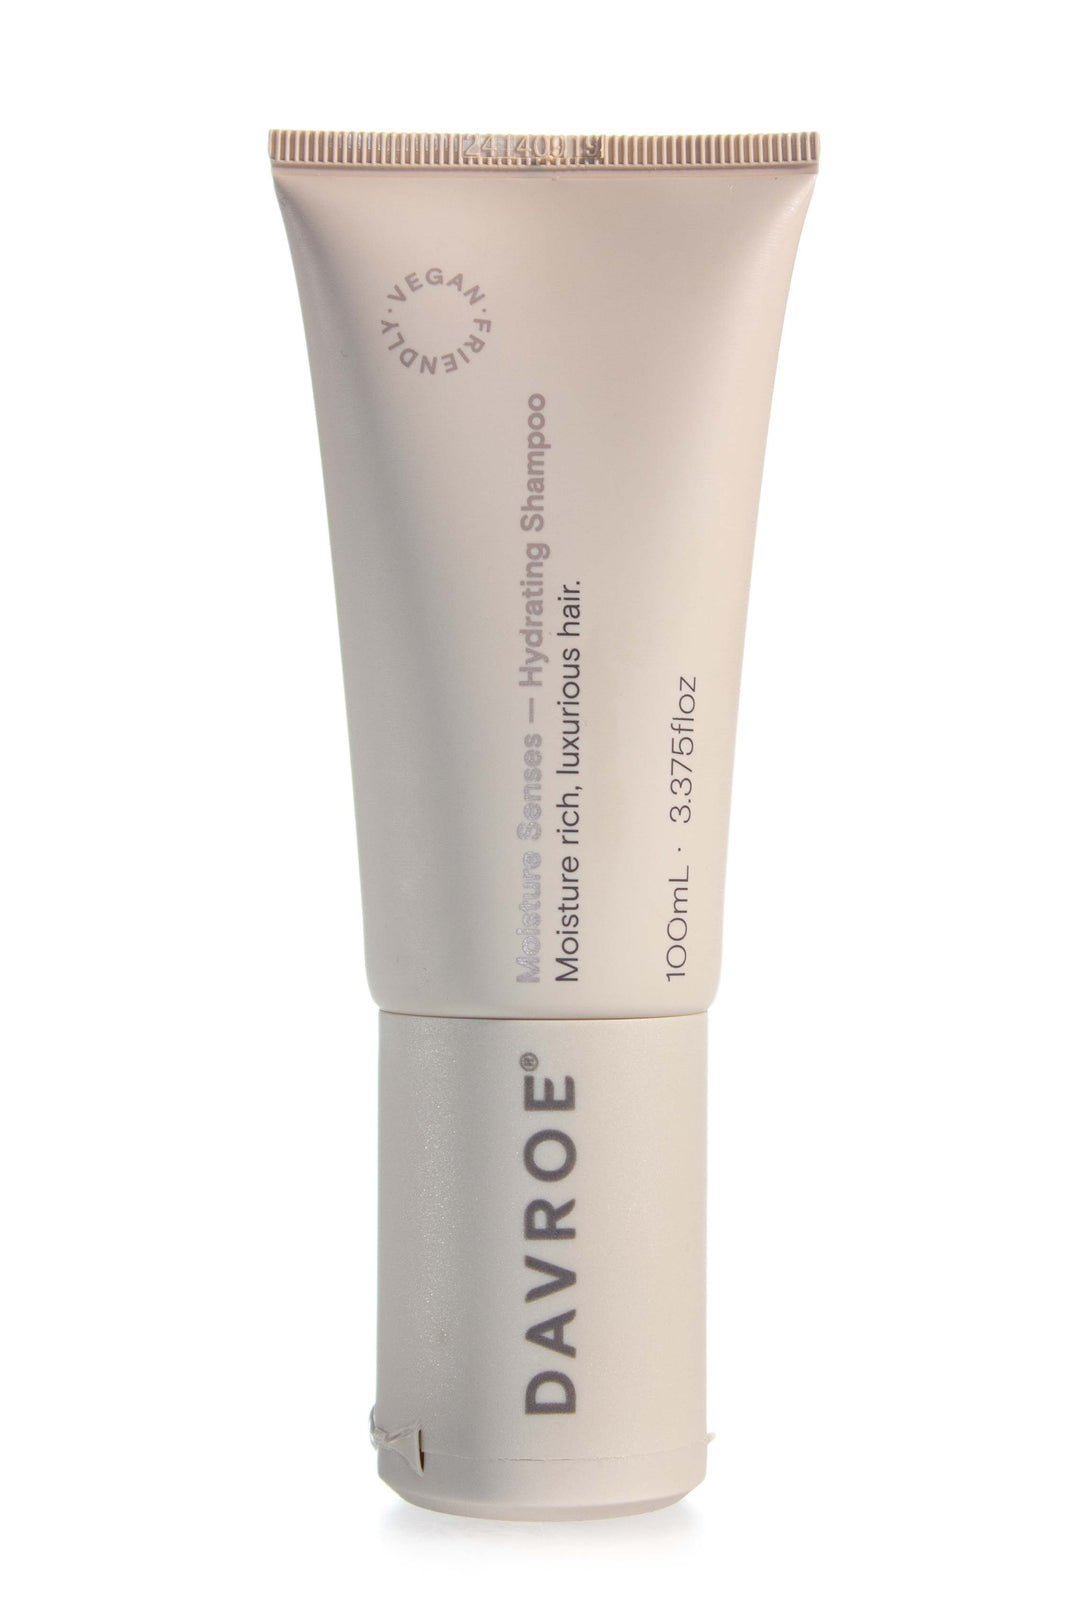 Product Image: Davroe Moisture Senses - Hydrating Shampoo - 100ml